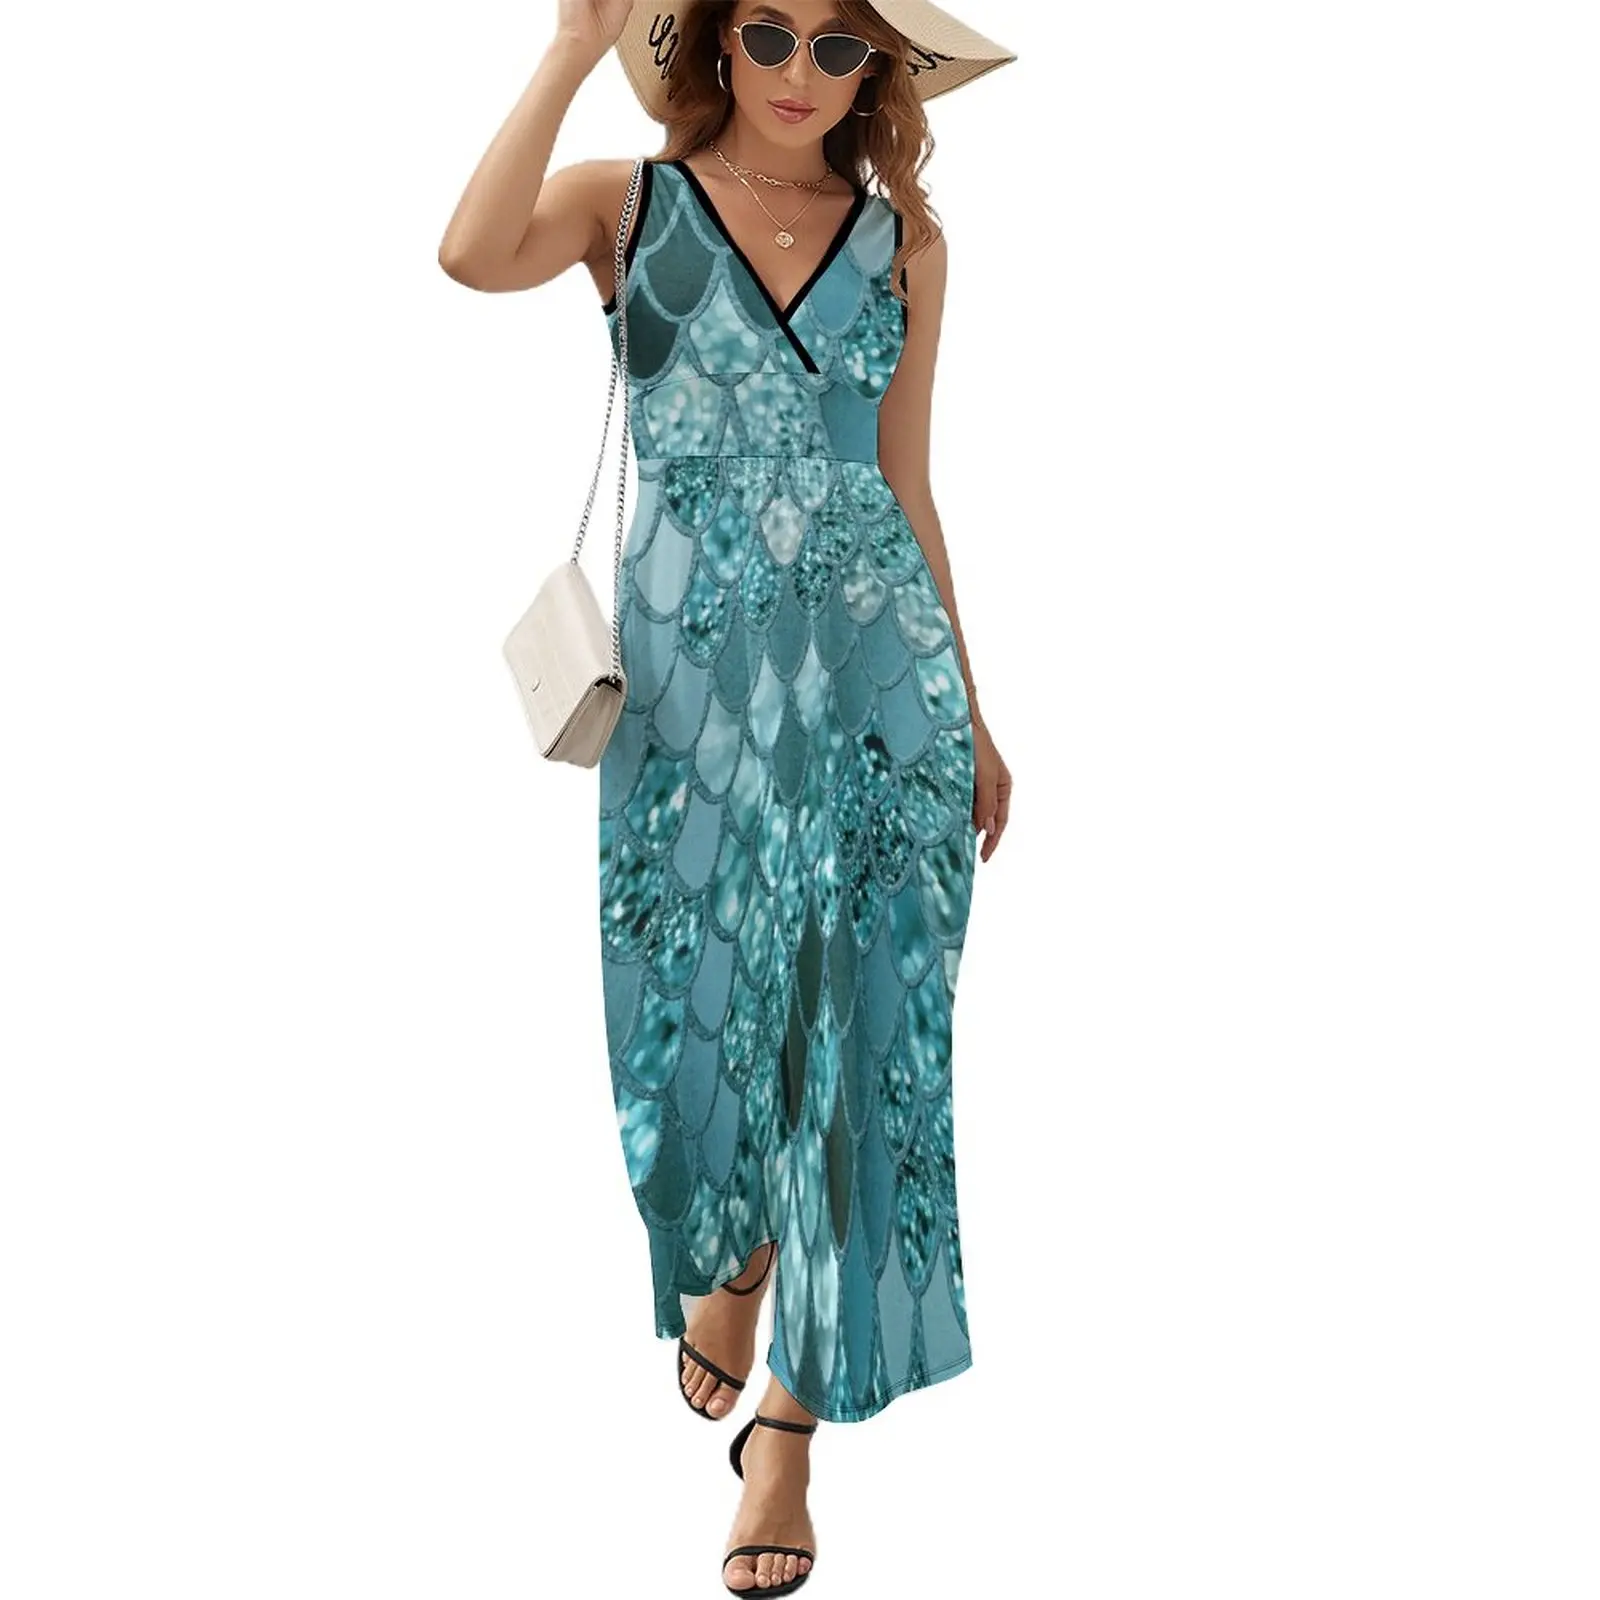 

Mermaid Glitter Scales #4 (Faux Glitter) #shiny #decor #art Sleeveless Dress Dress for girls Women's summer suit